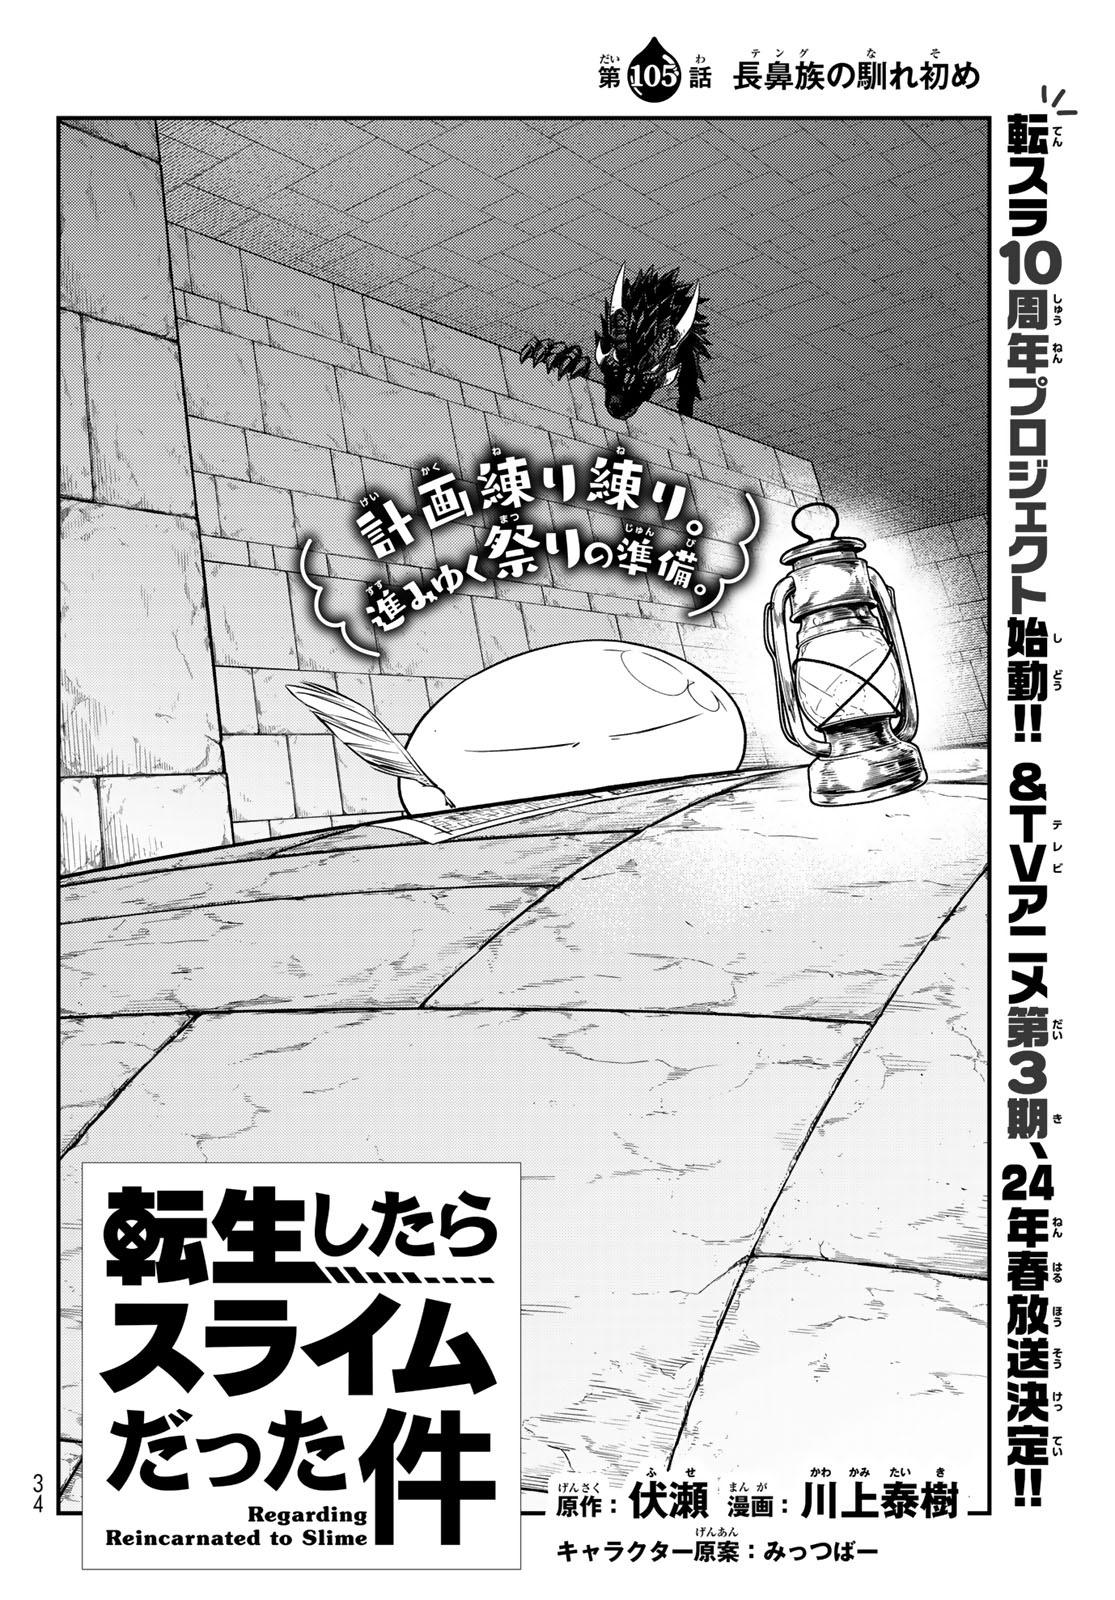 DISC] Tensei shitara slime Datta ken: Clayman Revenge chapter 3